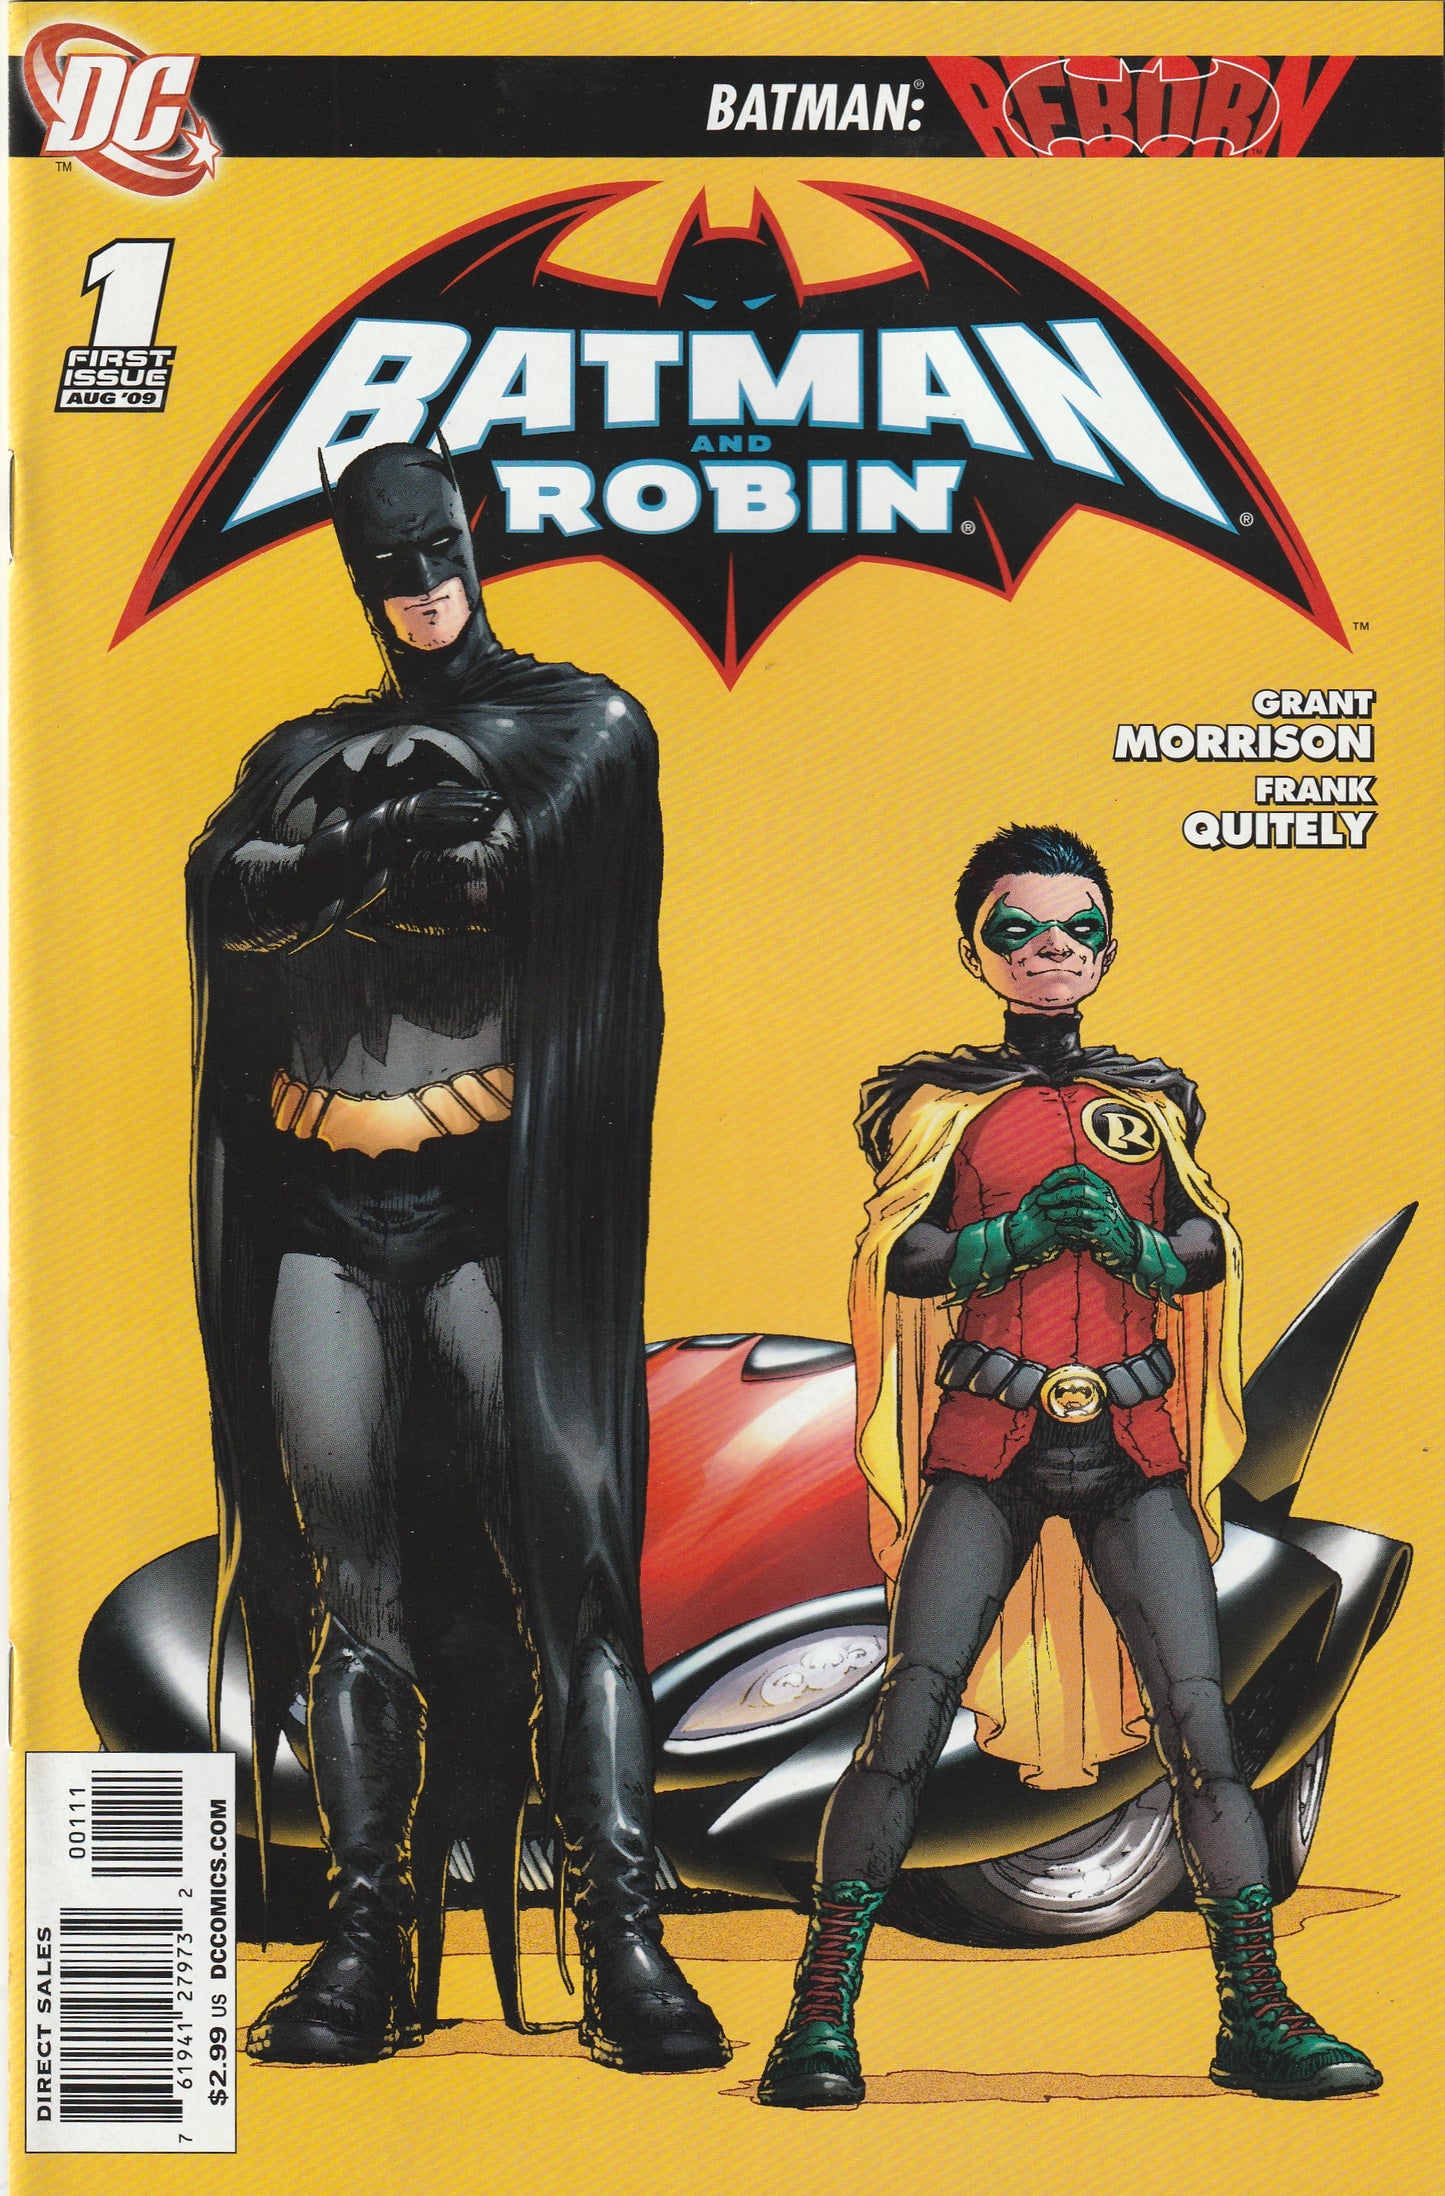 Batman and Robin #1 (2009) - Grant Morrison & Frank Quitely - 1st Appearance of Professor Pyg